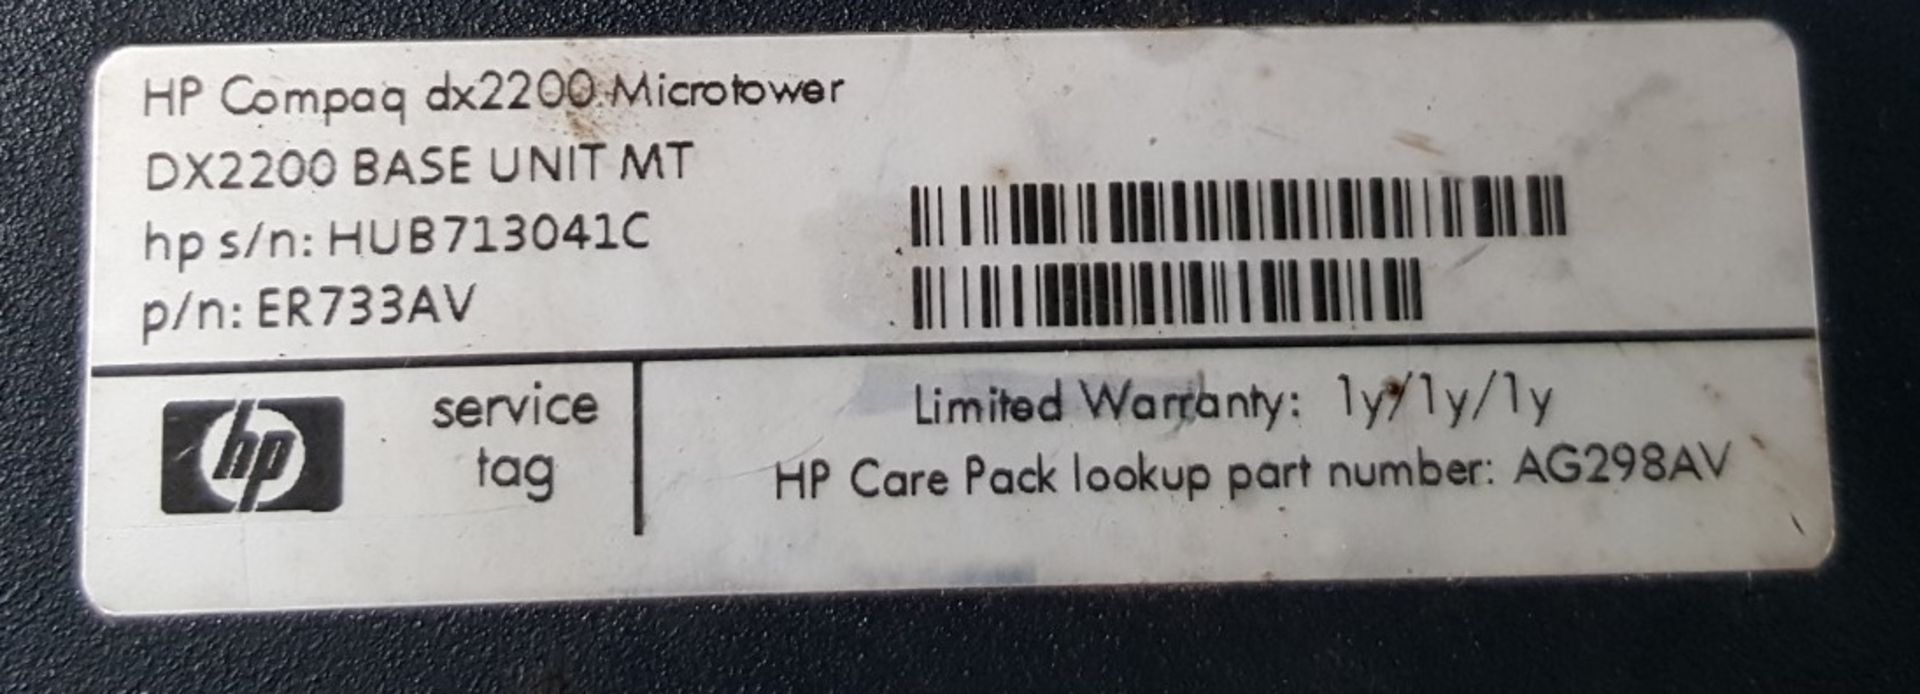 4 x HP Compaq dx2200 MT Desktop PC Intel Pentium 4 3.2GHz 1GB RAM Ref LD407 - Image 5 of 5